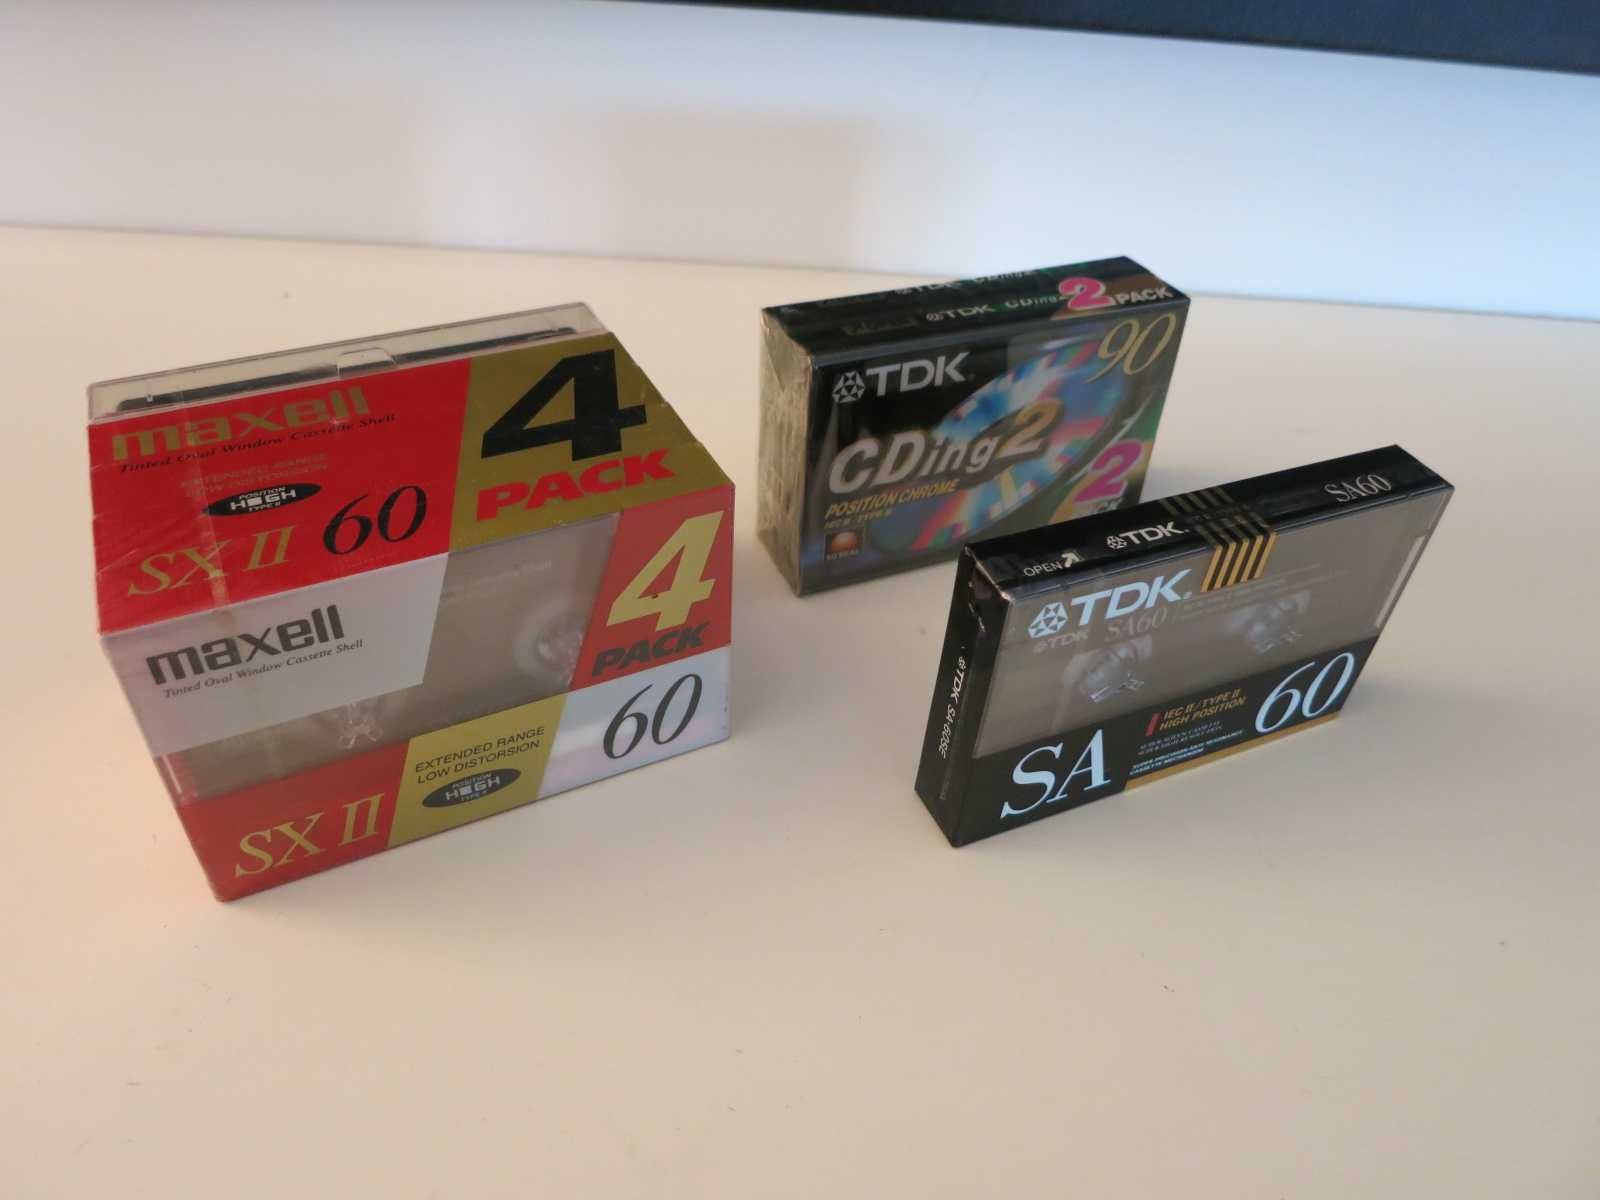 Cassetes Maxell SX II 60 + TDK CDing 90 + TDK SA 60